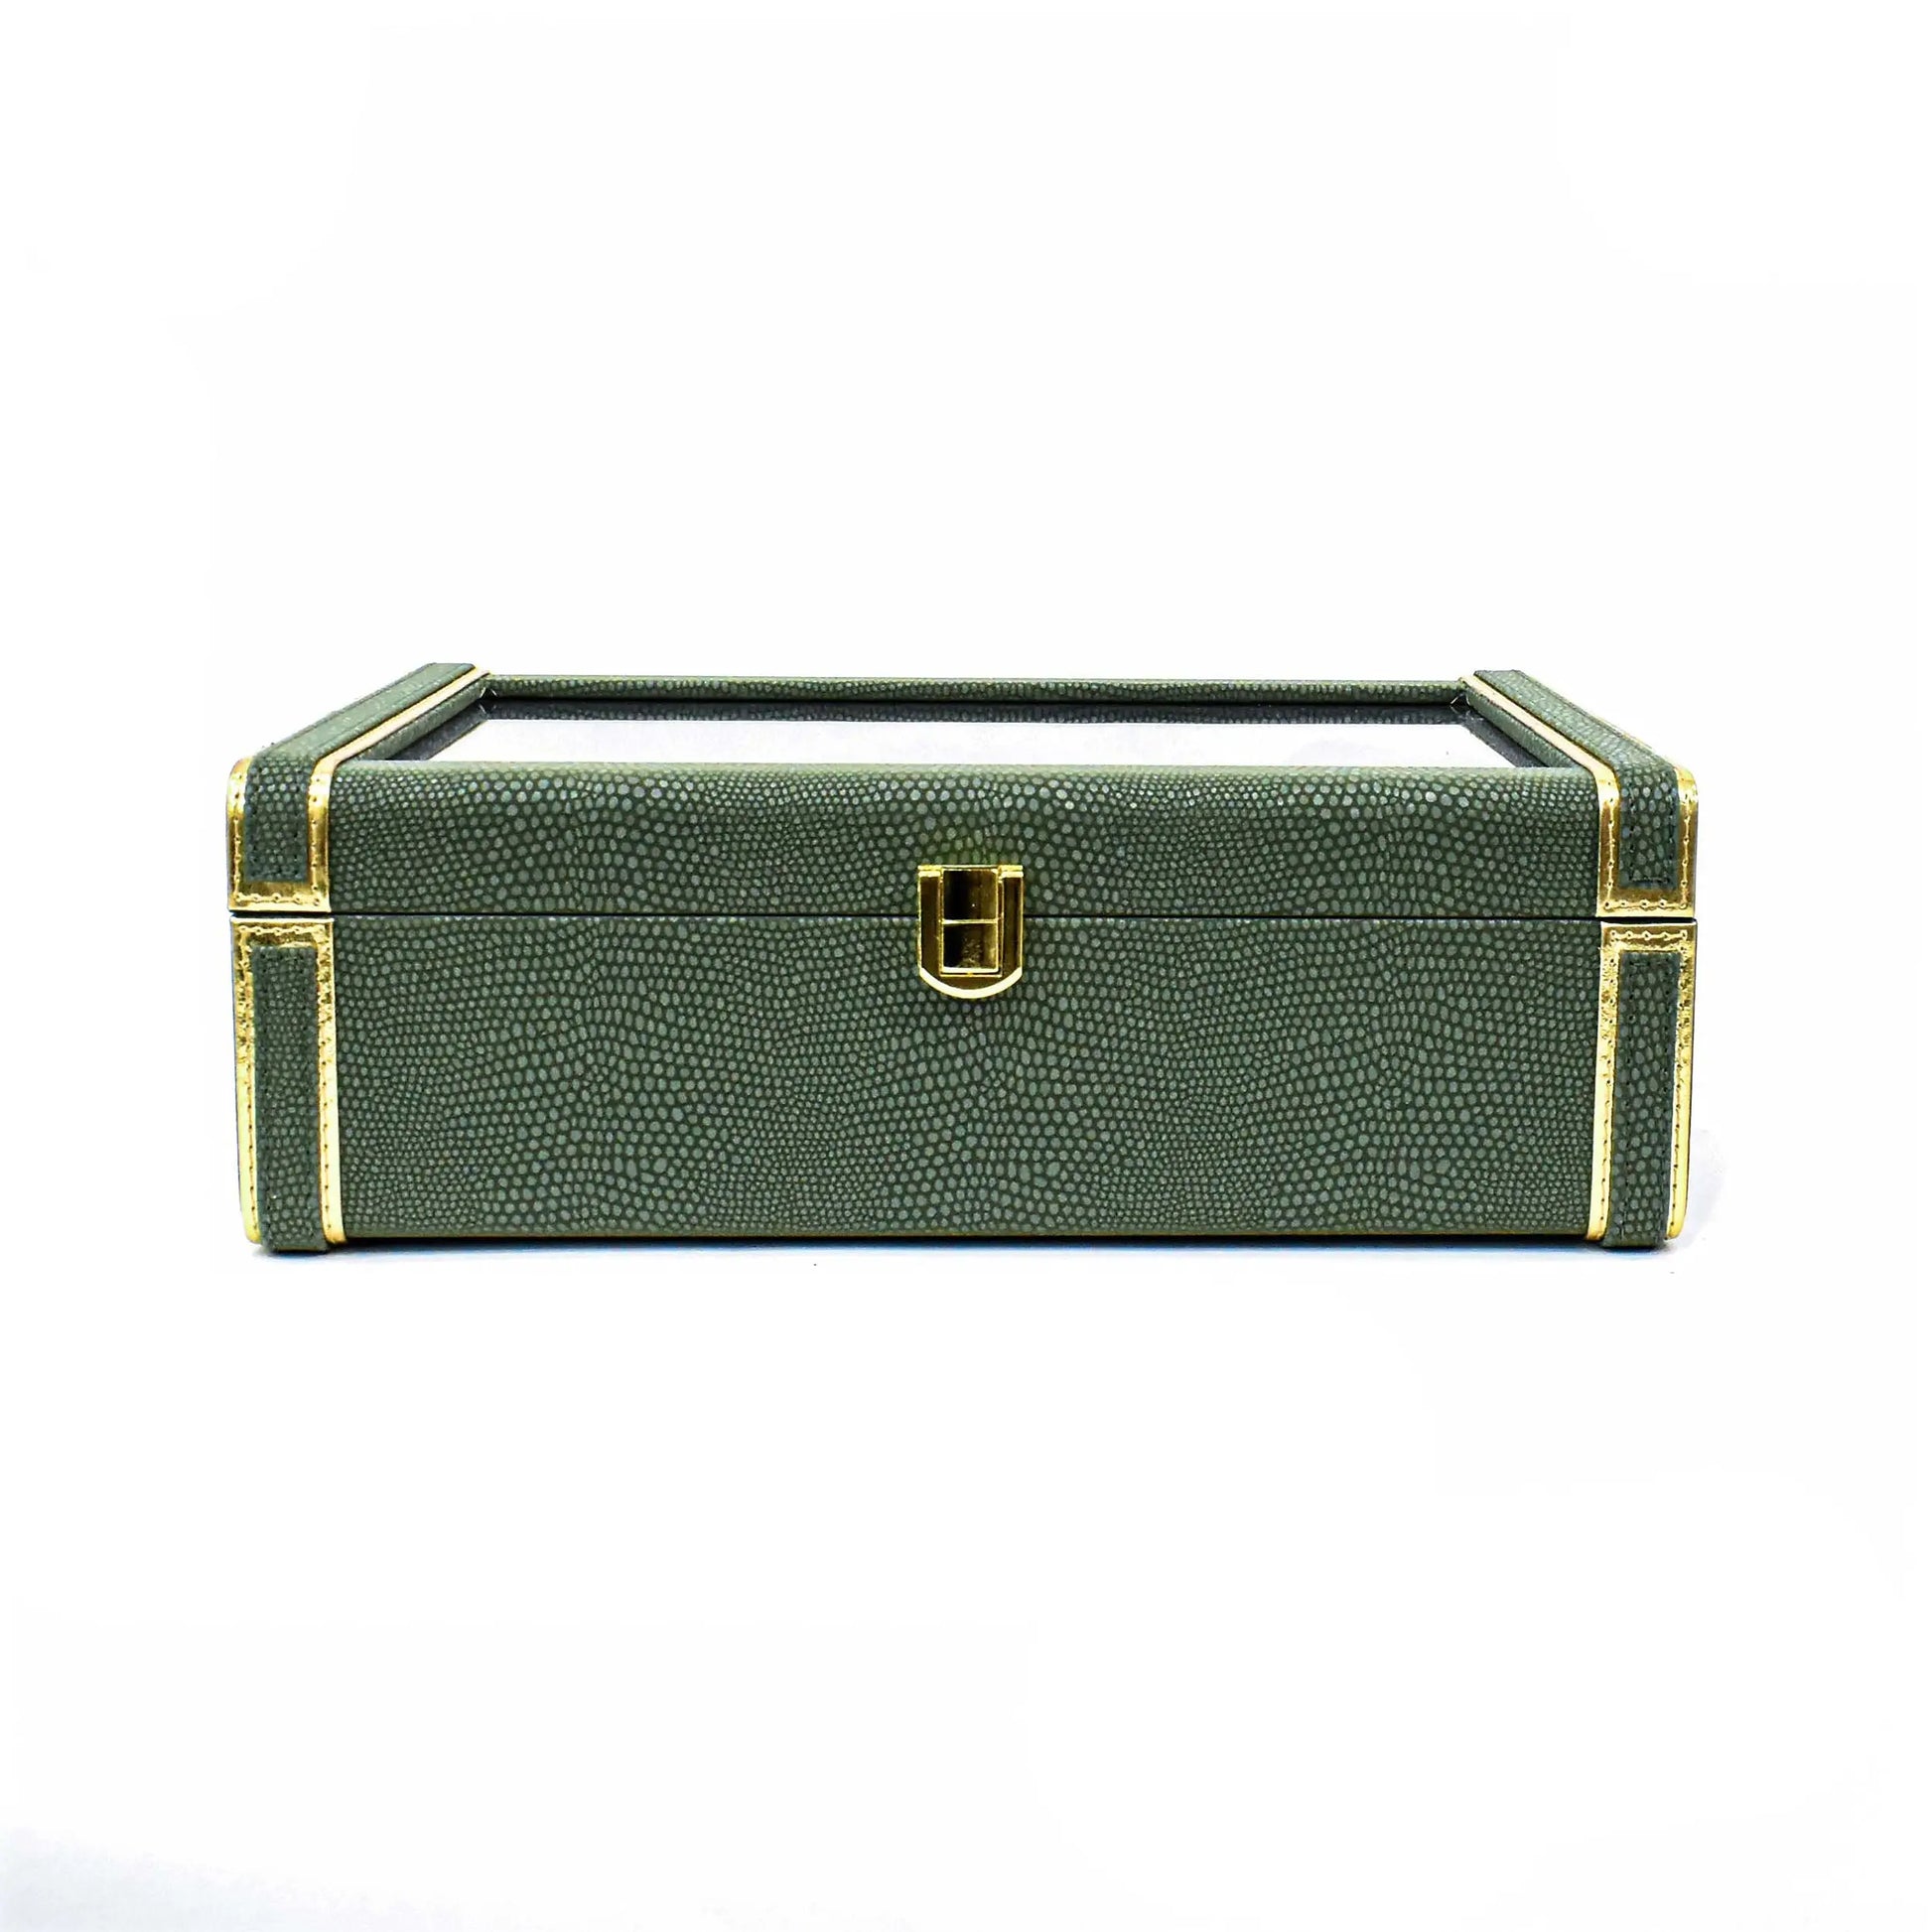 Leatherette Watch Storage and Organiser Box 8 Partition | Olive Green | Serpentine Ichkan